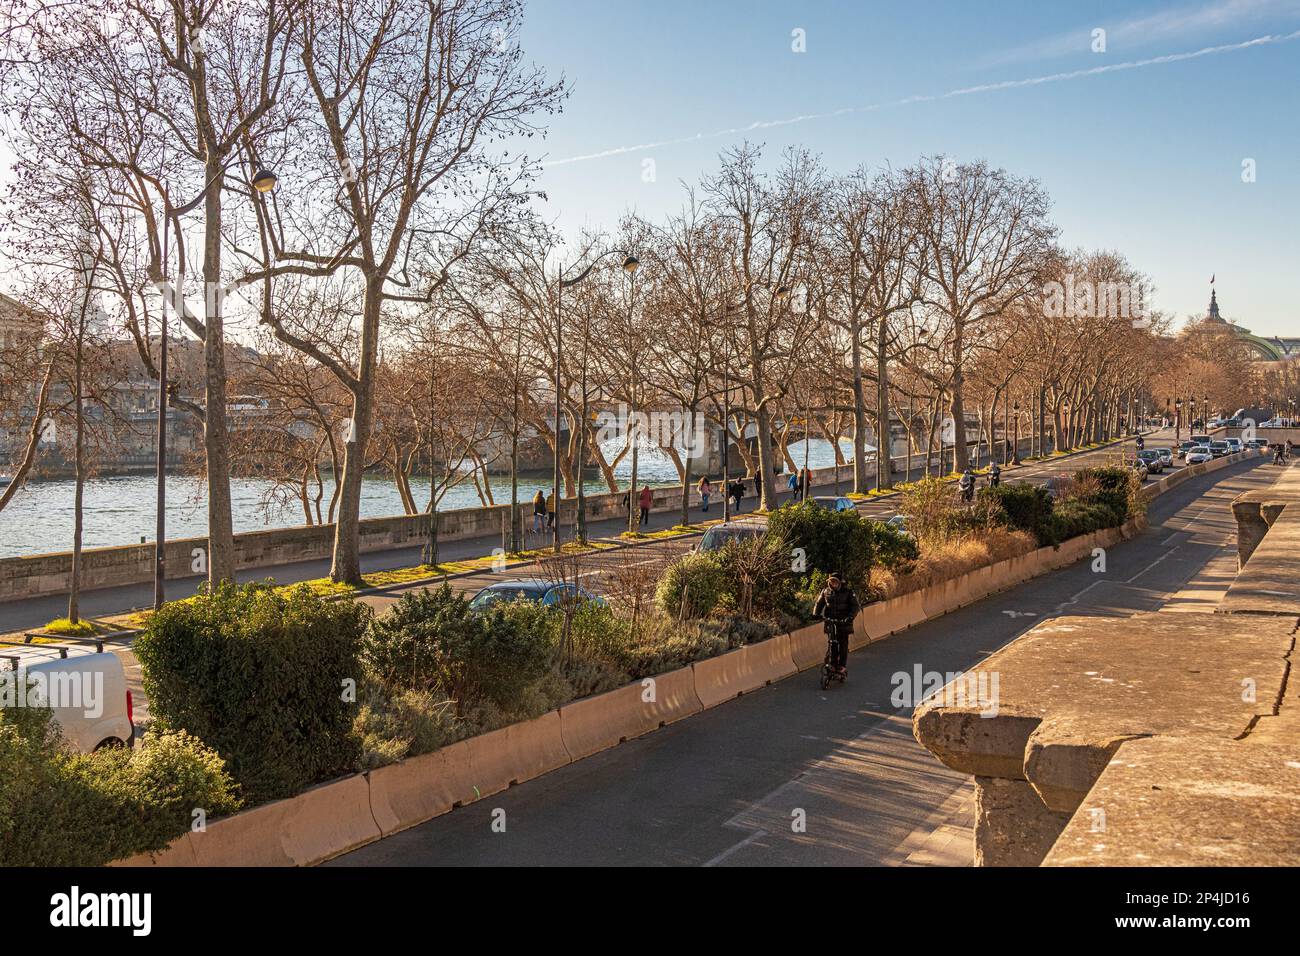 The Quai des Tuileries running alongside the River Seine in Paris, France. Stock Photo